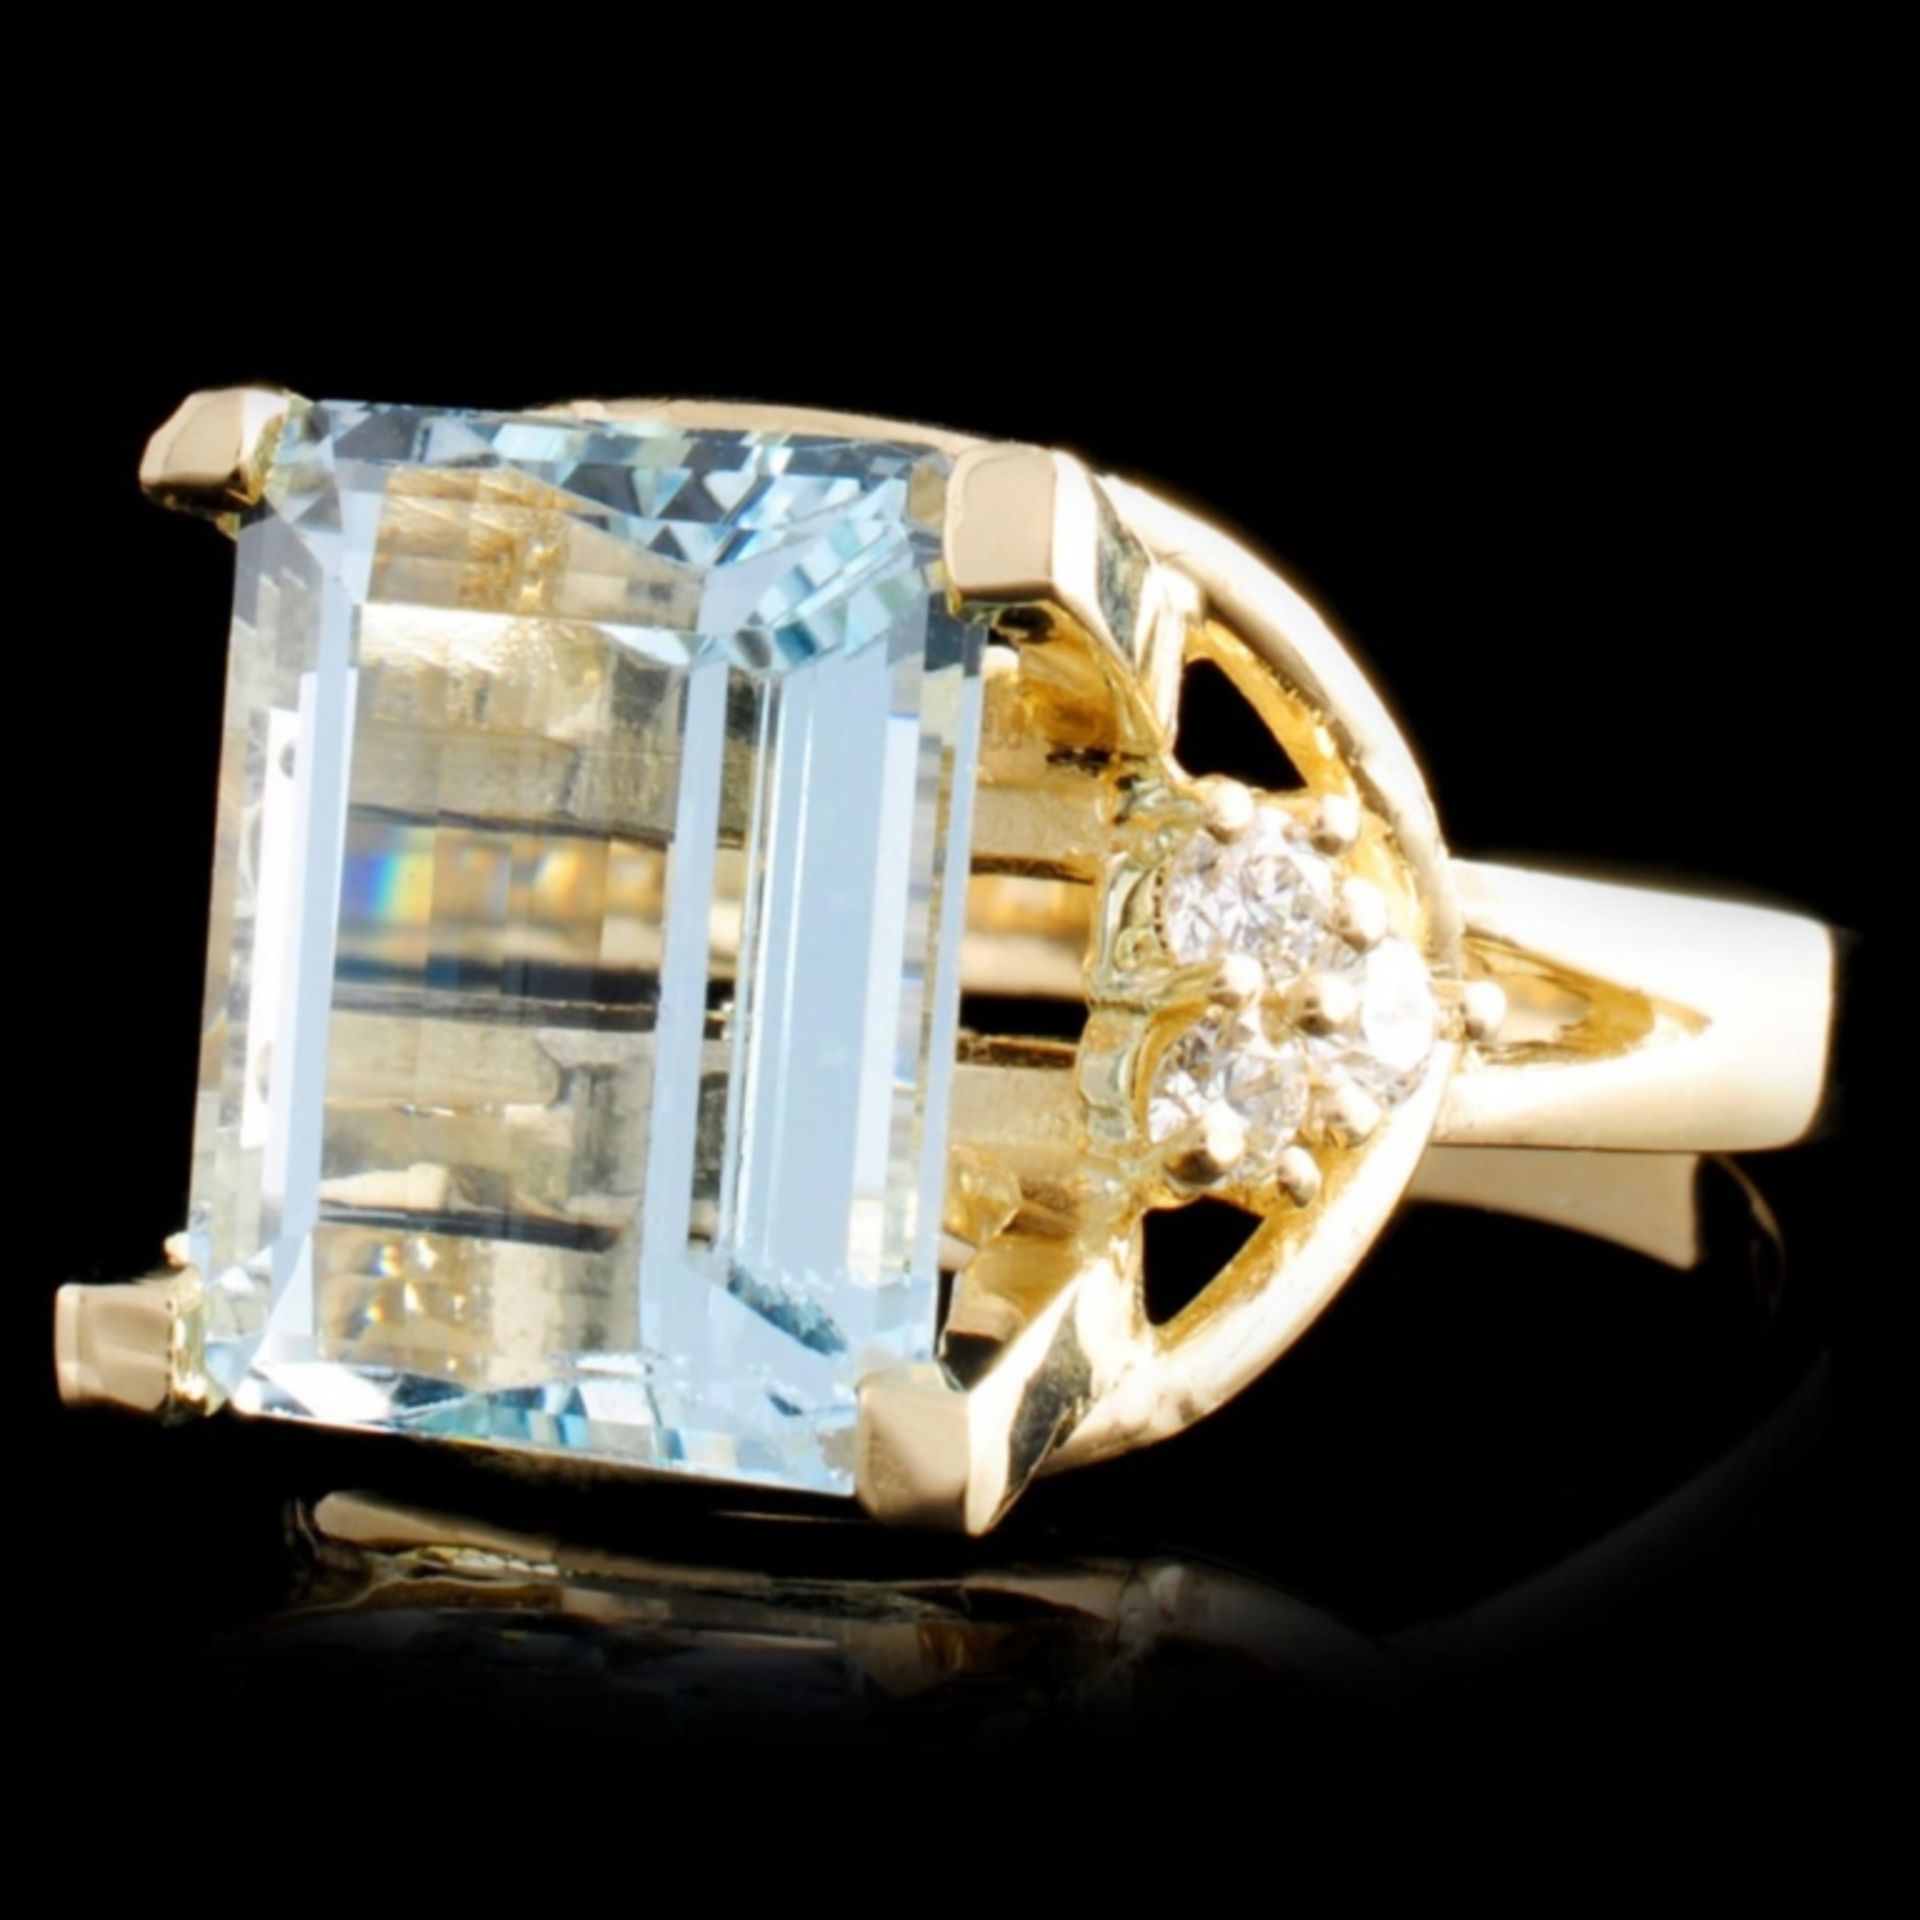 14K Gold 6.02ct Aquamarine & 0.29ctw Diamond Ring - Image 2 of 4